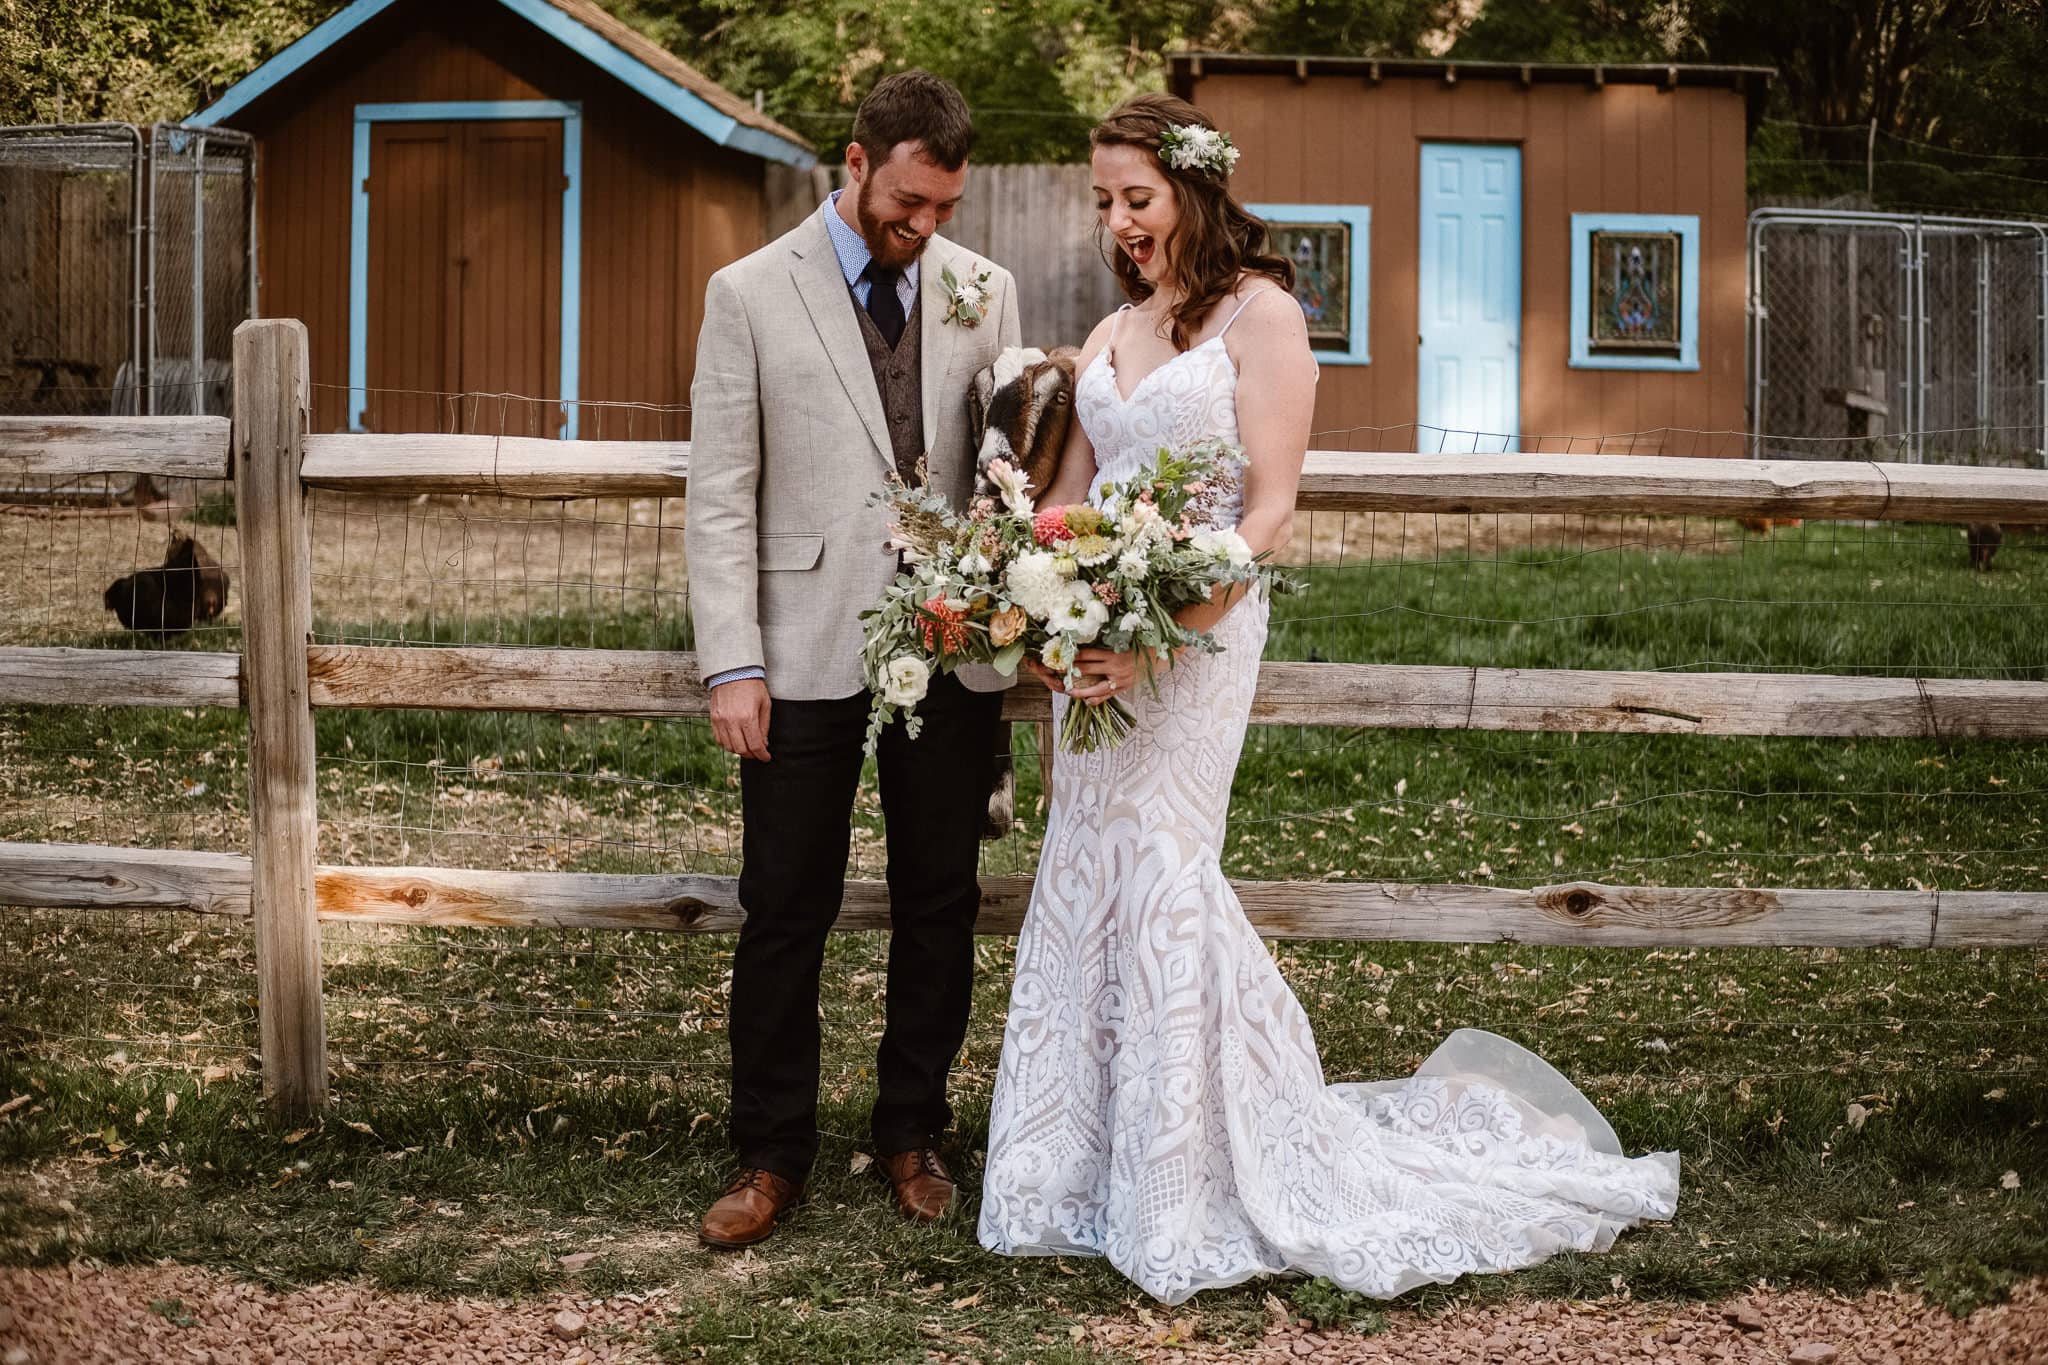 Lyons Farmette wedding photographer, Colorado intimate wedding photographer, bride and groom with goat, goat eating boutonniere